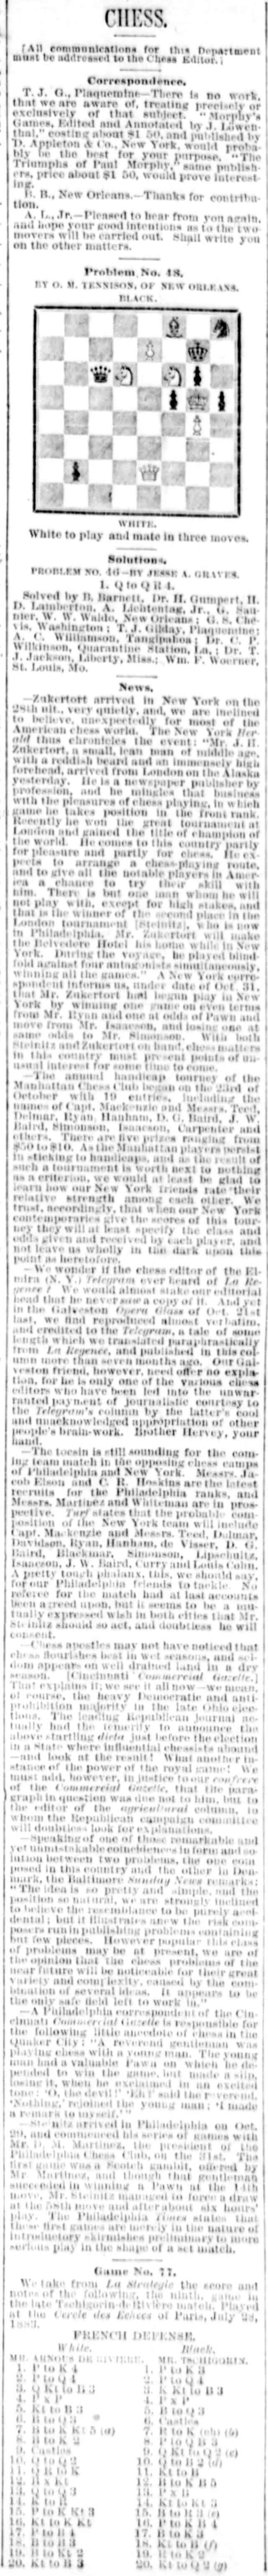 1883.11.04-01 New Orleans Times-Democrat.jpg